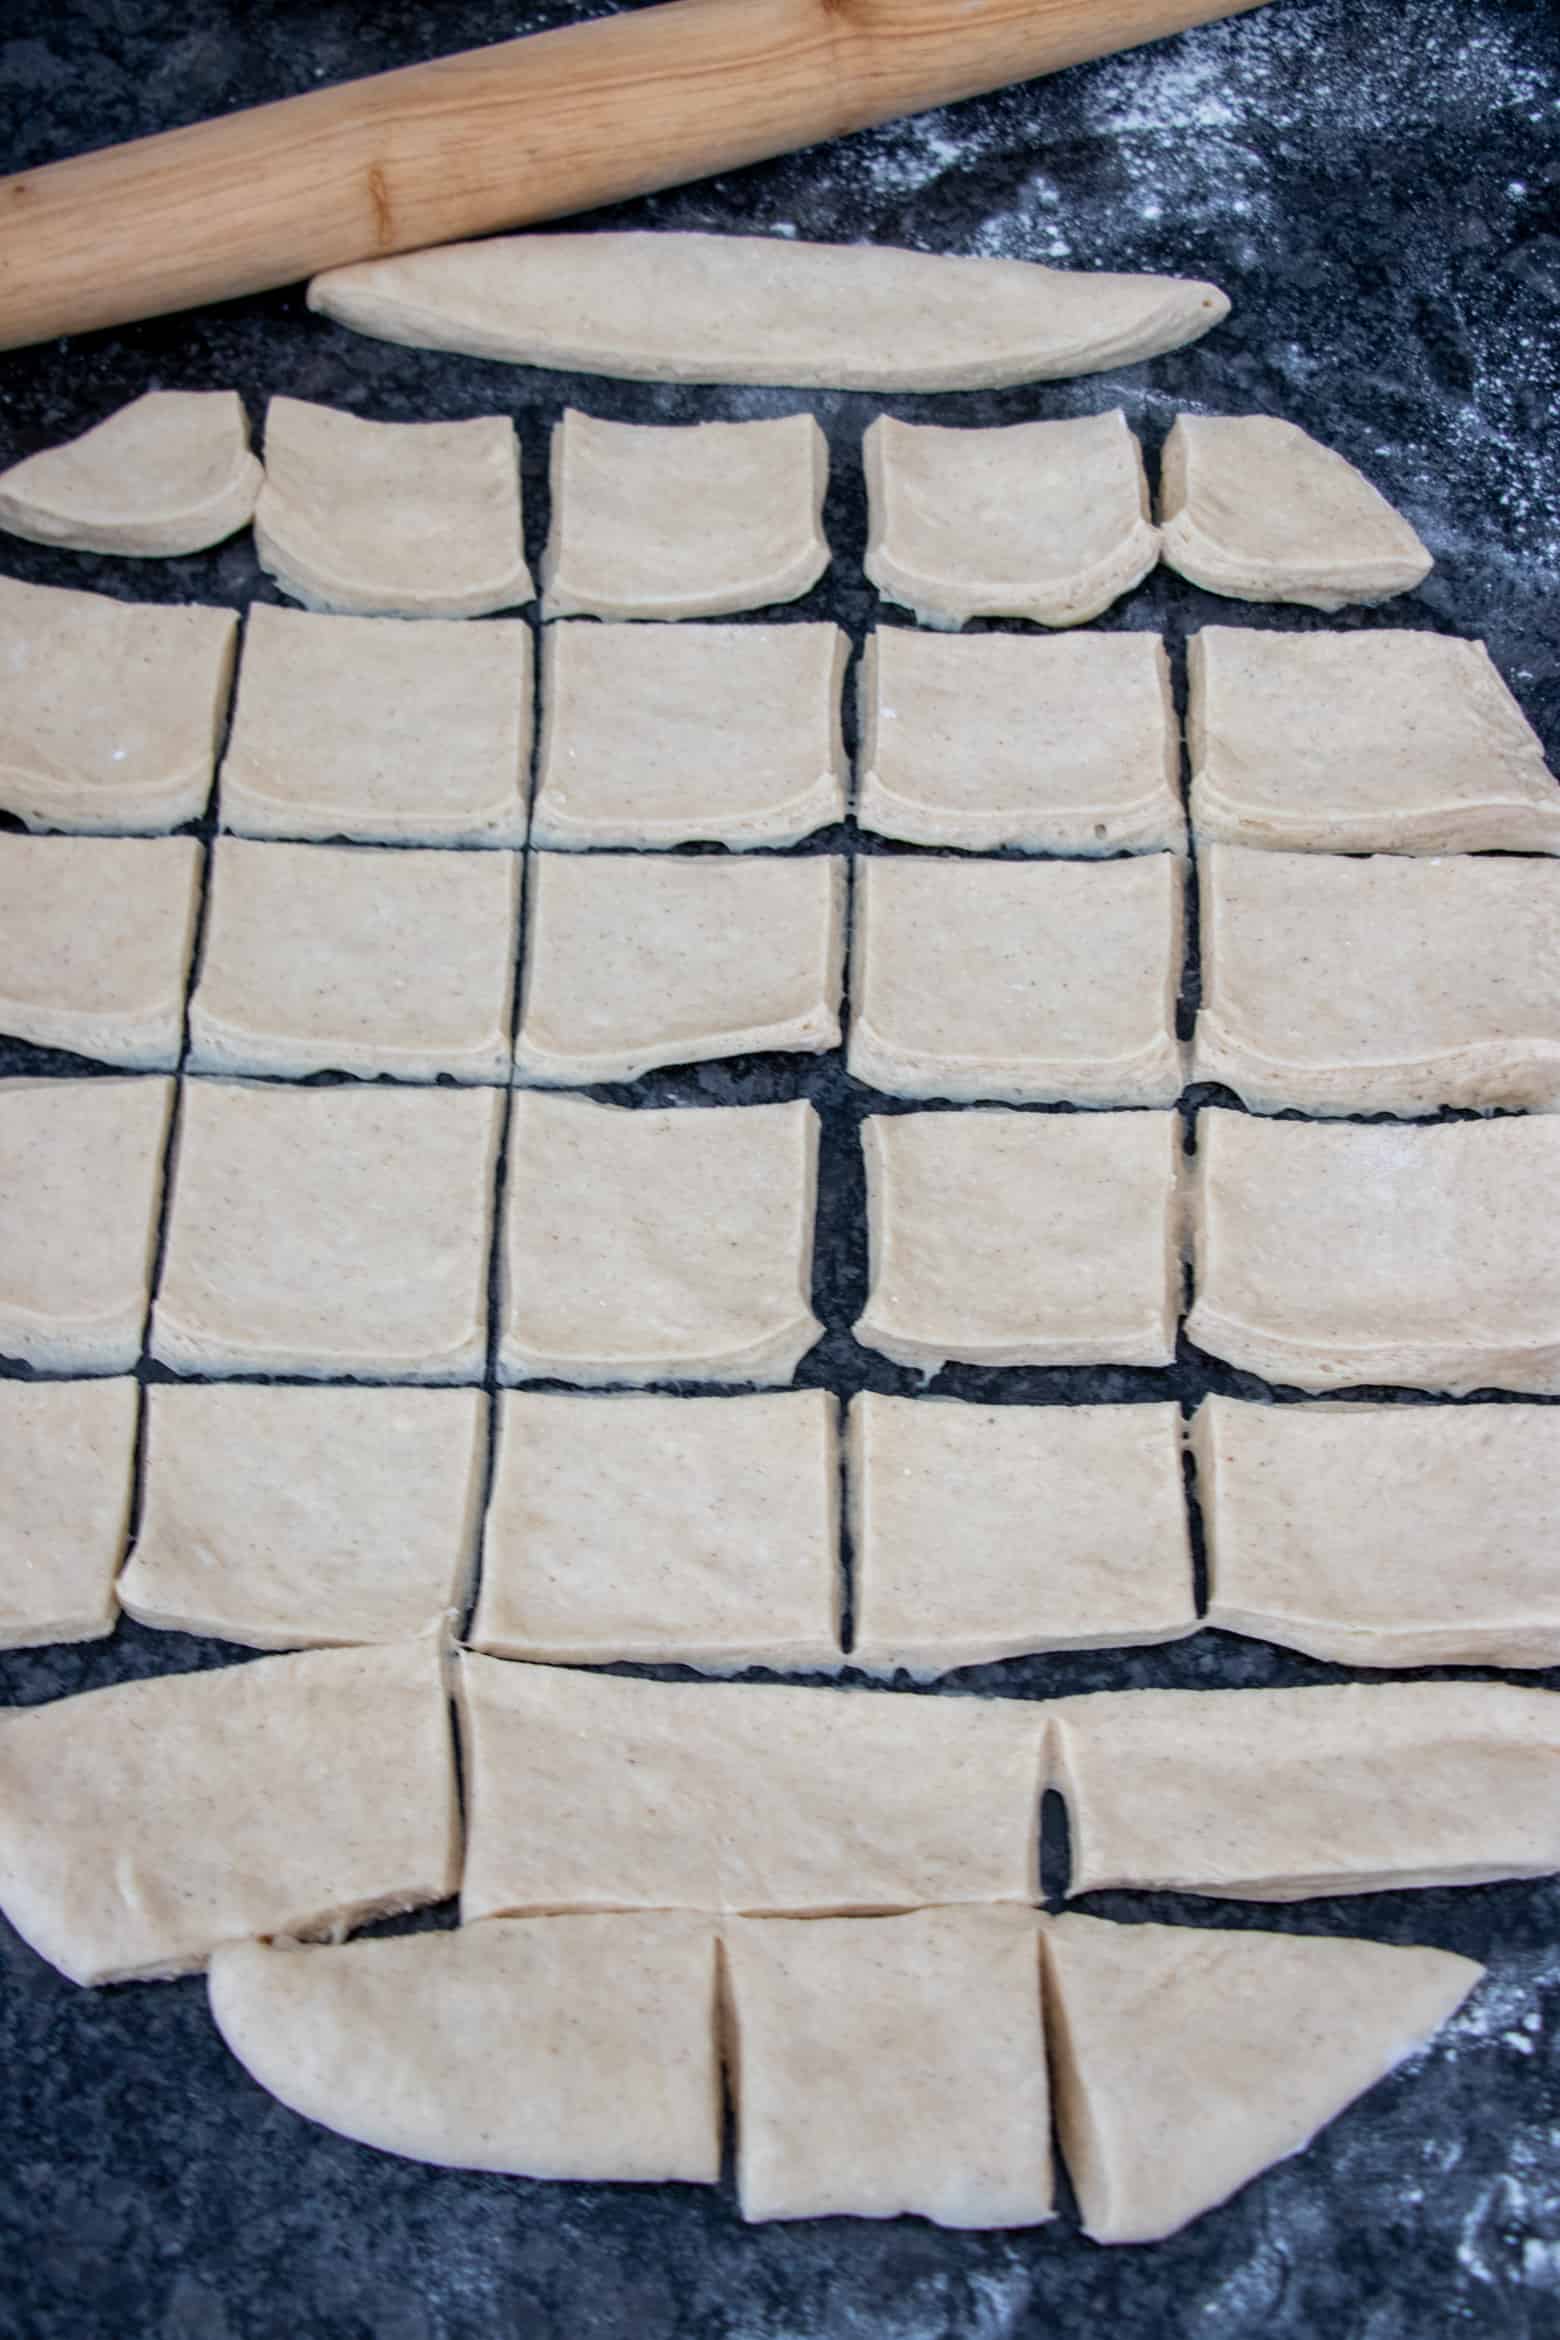 Rolled out beignet dough cut into squares.